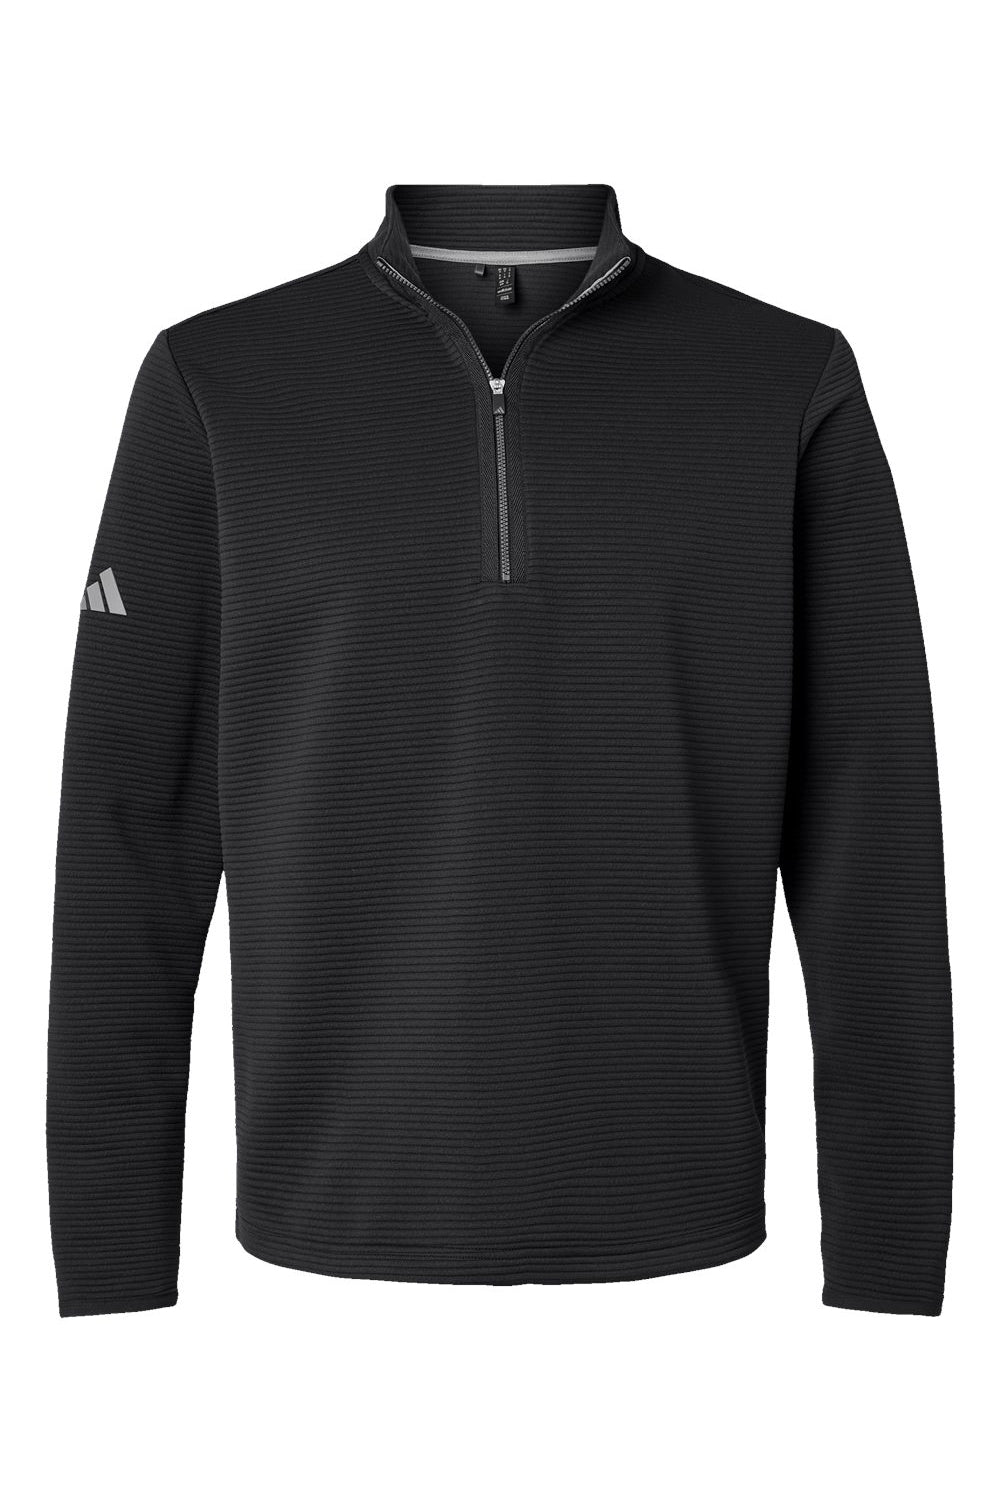 Adidas A588 Mens Spacer 1/4 Zip Sweatshirt Black Flat Front